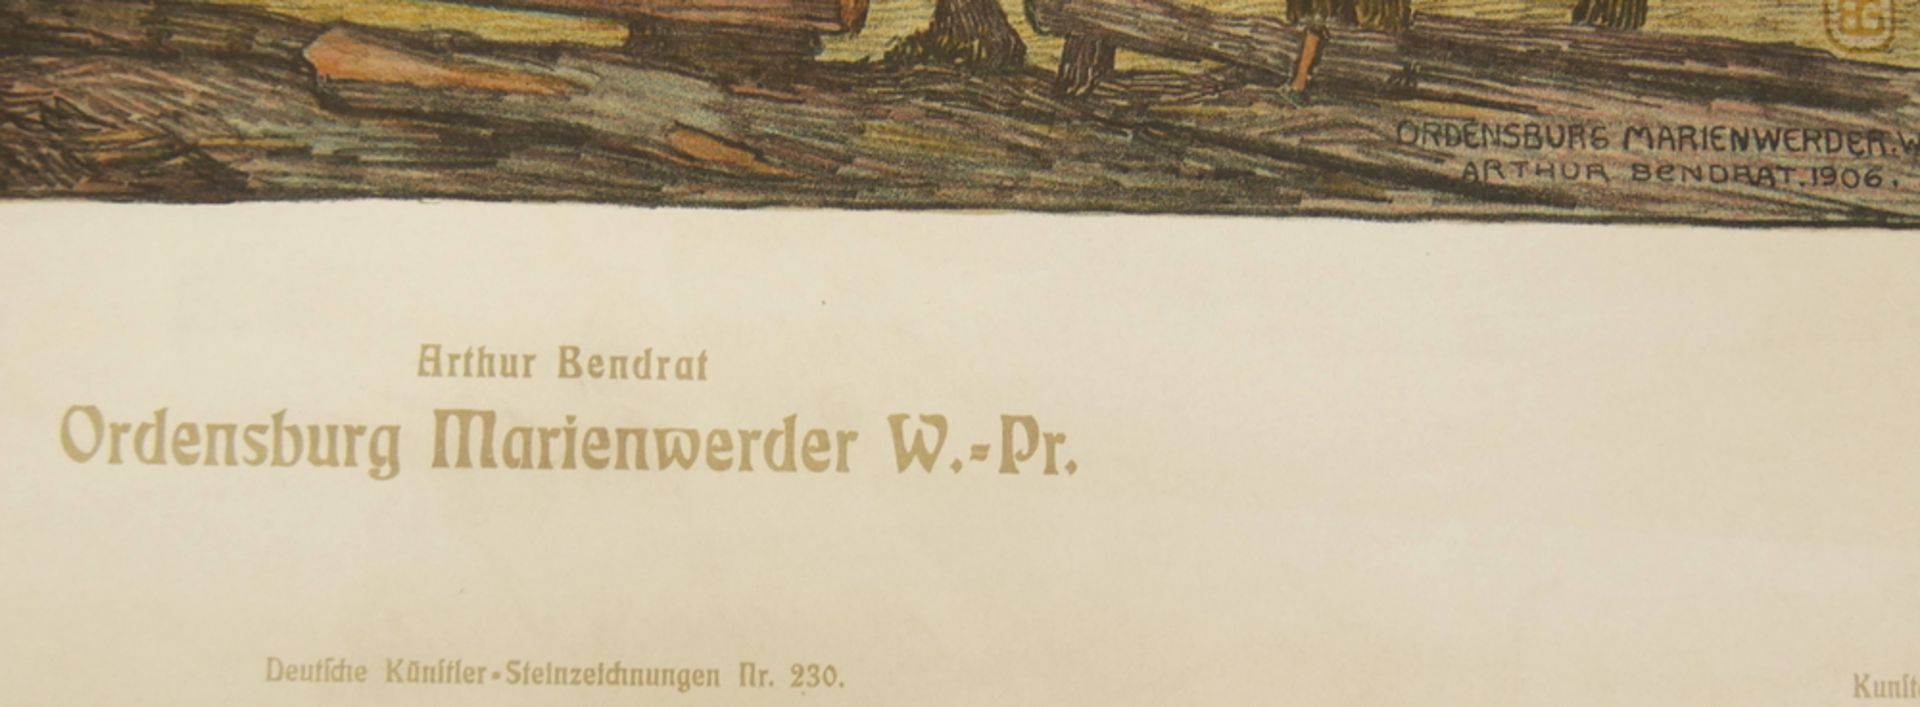 Farblithografie "Ordensburg Marienwerder" Arthur Bendrat 1872 - 1914. Maße ca. 44 x 57 cm - Image 2 of 2